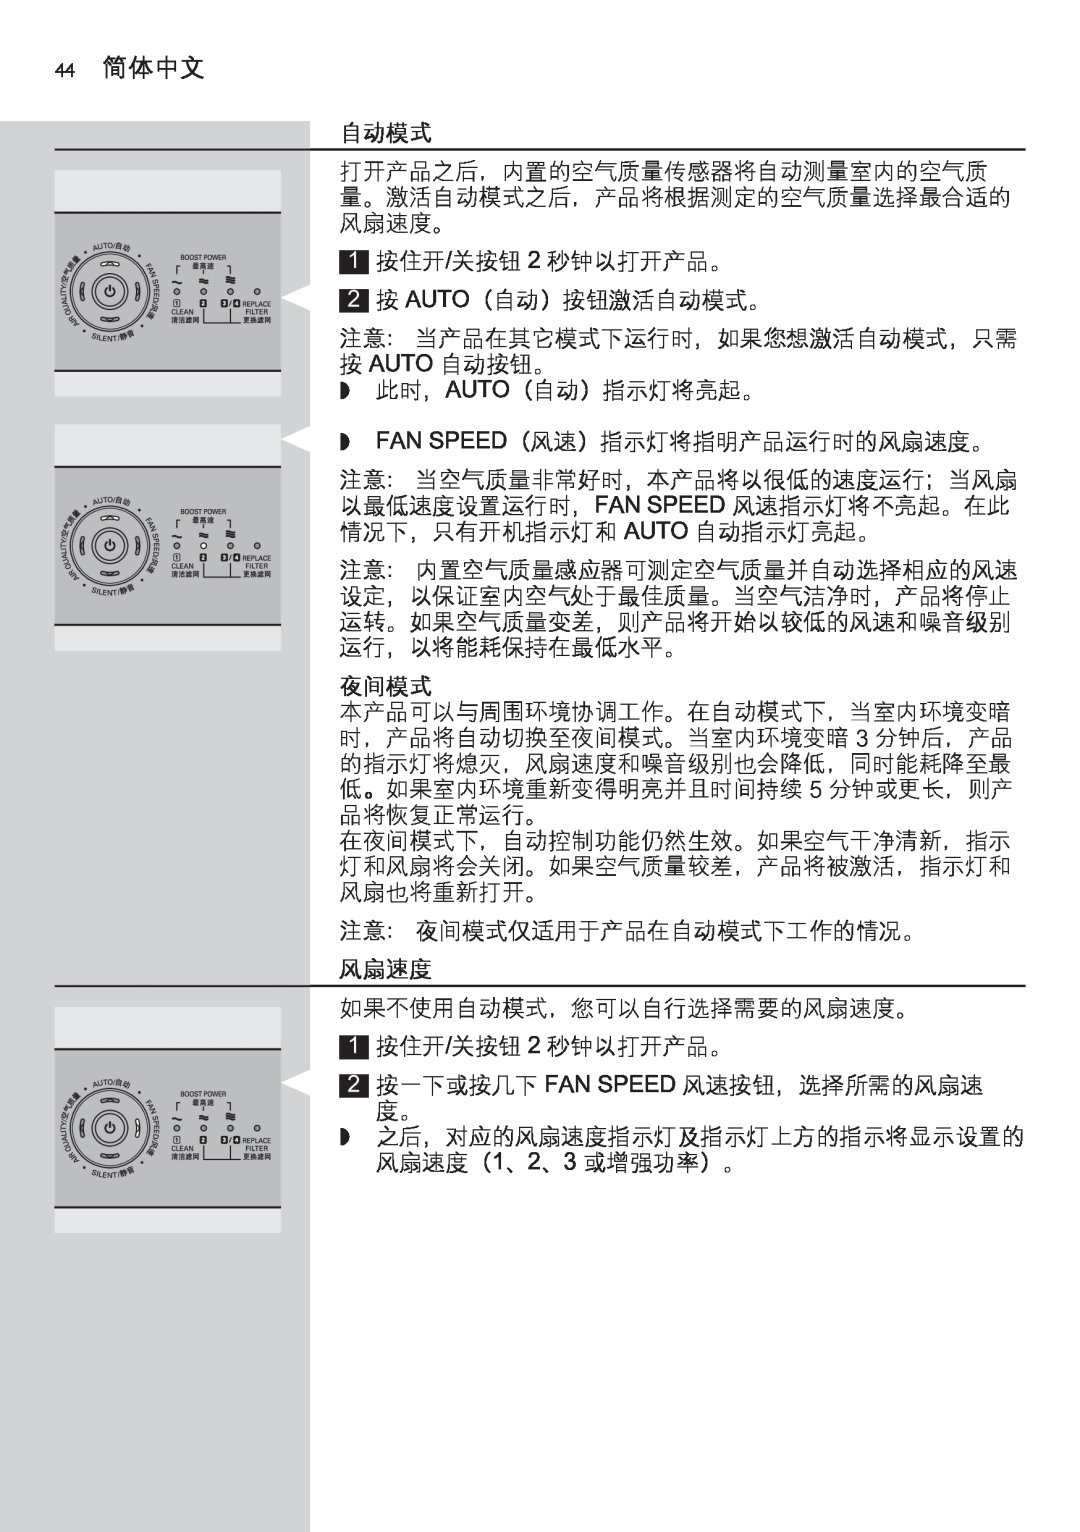 Philips AC4074 manual 44简体中文, 自动模式, 夜间模式, 风扇速度 